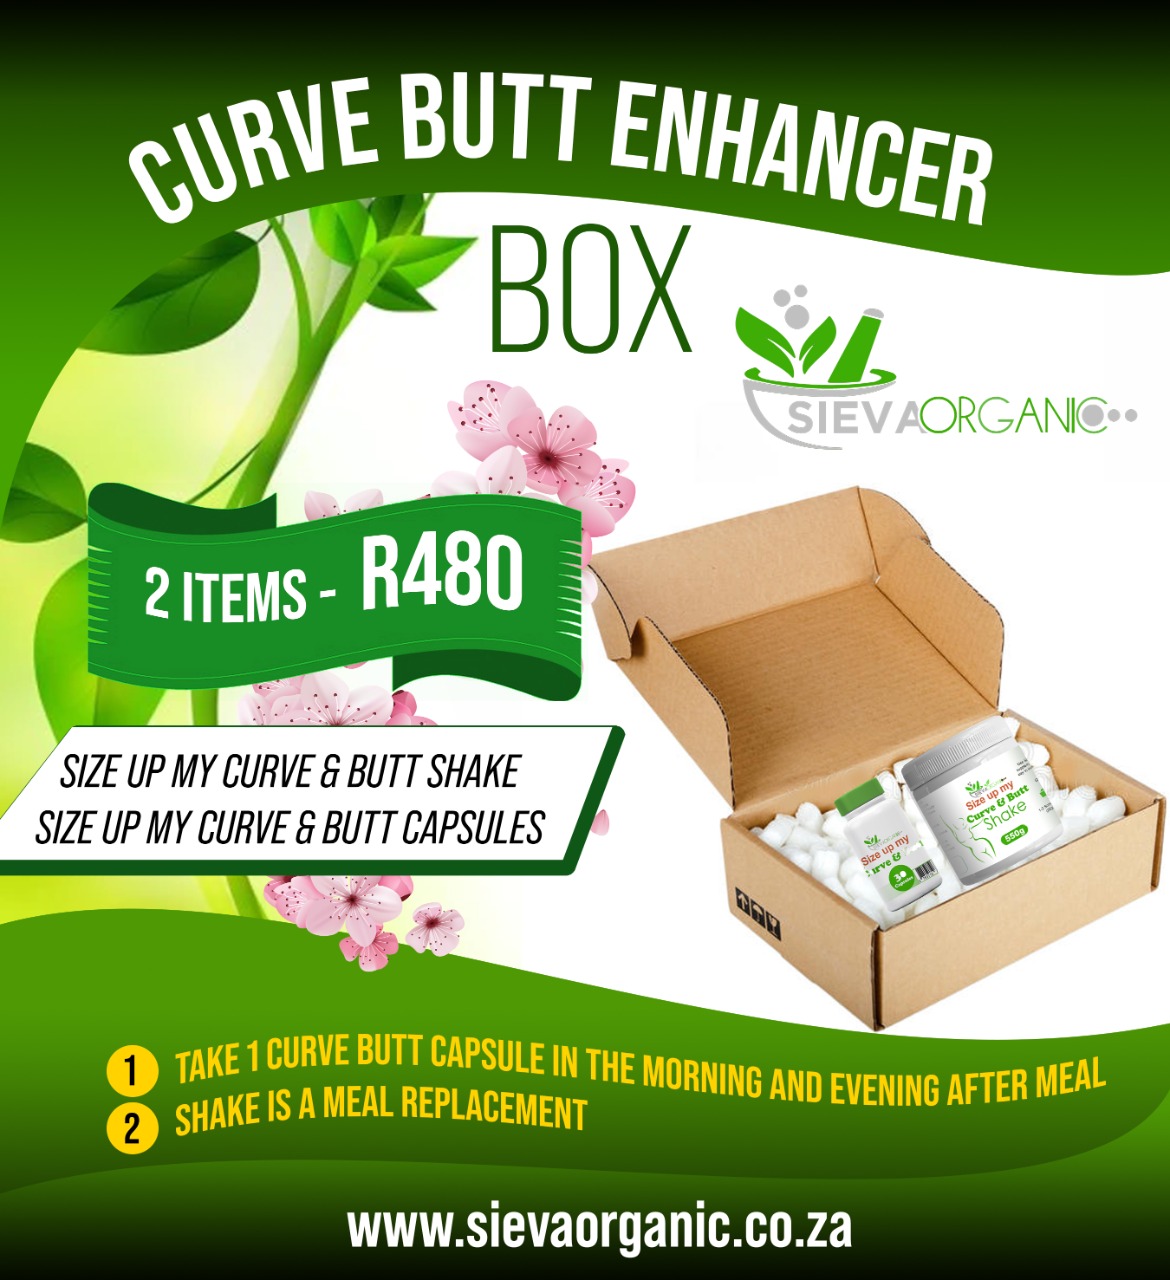 Curve Butt Enhancer Box – Sieva Organic